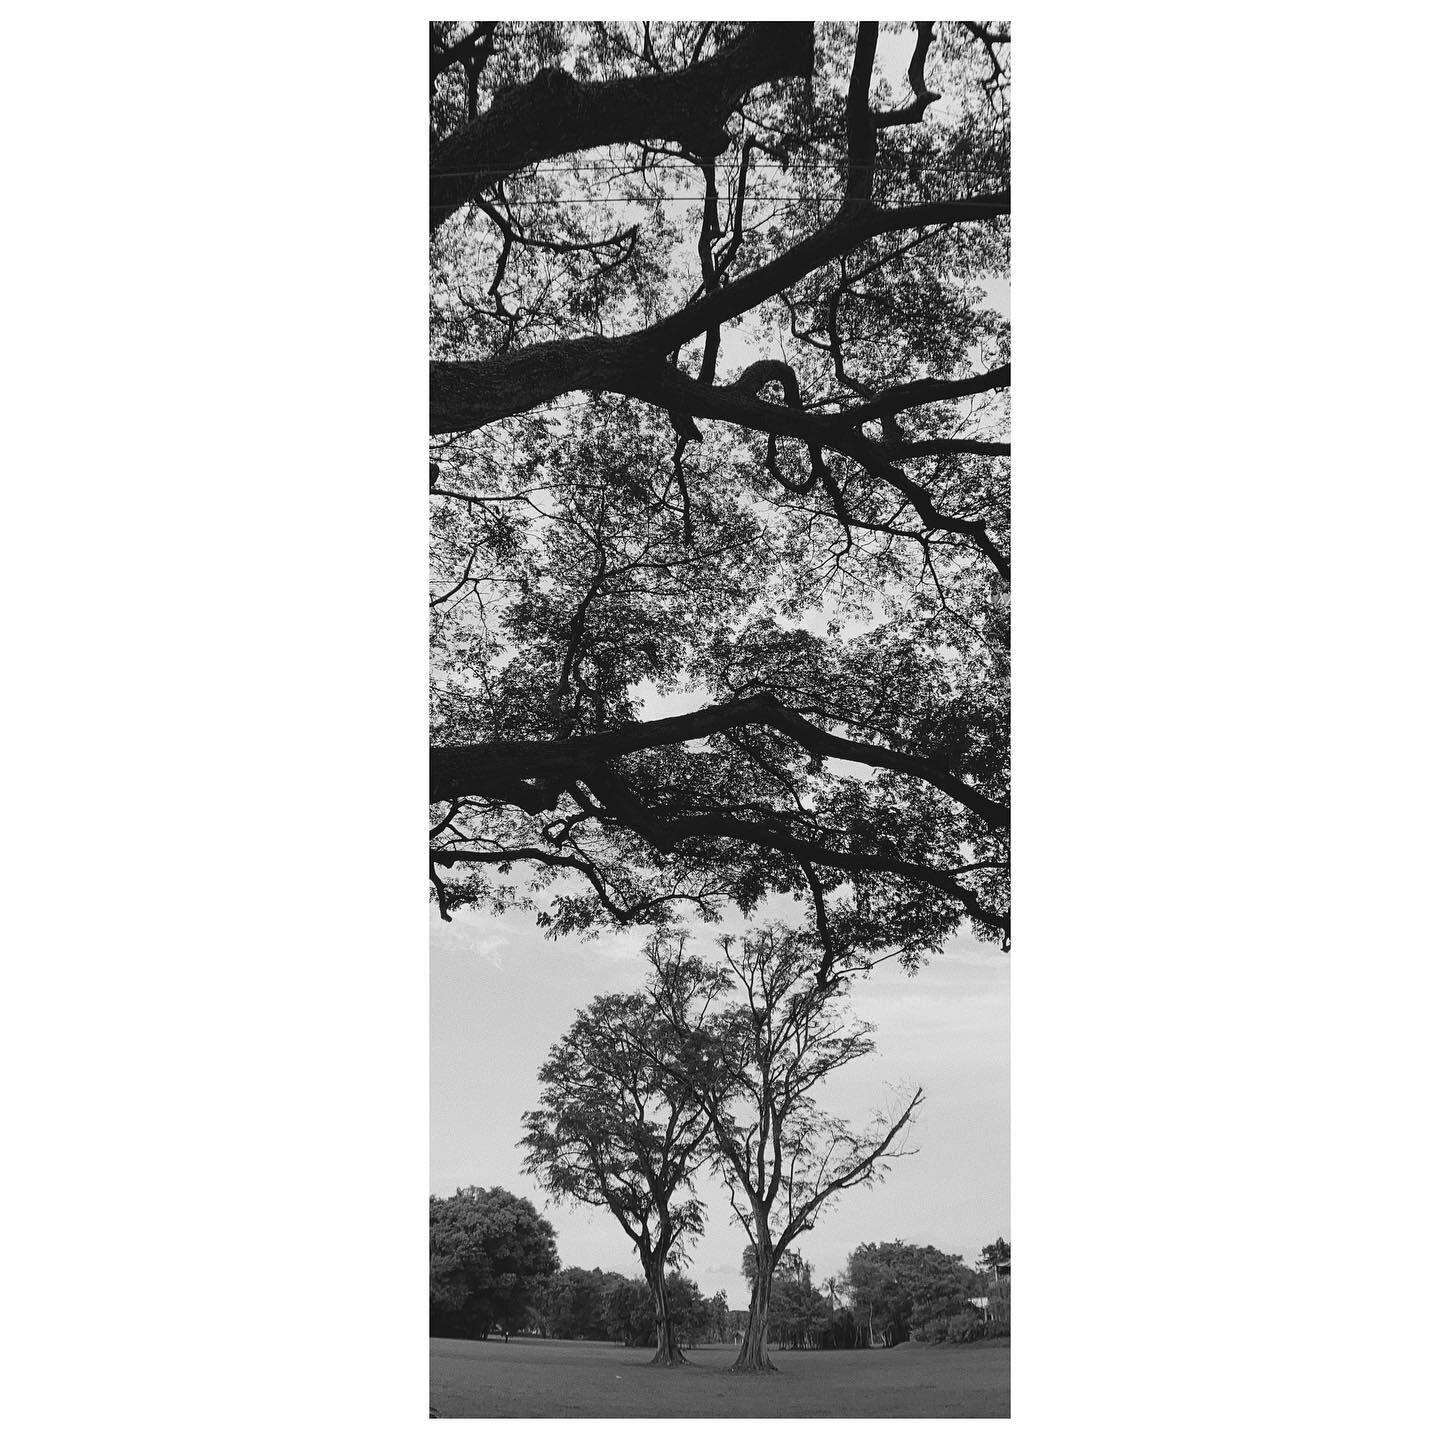 I like taking pictures of trees
&bull;
&bull;
&bull;
&bull;
&bull;
#momentlens #shotonmoment #shotoniphone #moment #photography #vsco #mobilephotography #iphonephotography #momentcamera #beautiful #explore #anamorphic #cinematography #naturescape #ci